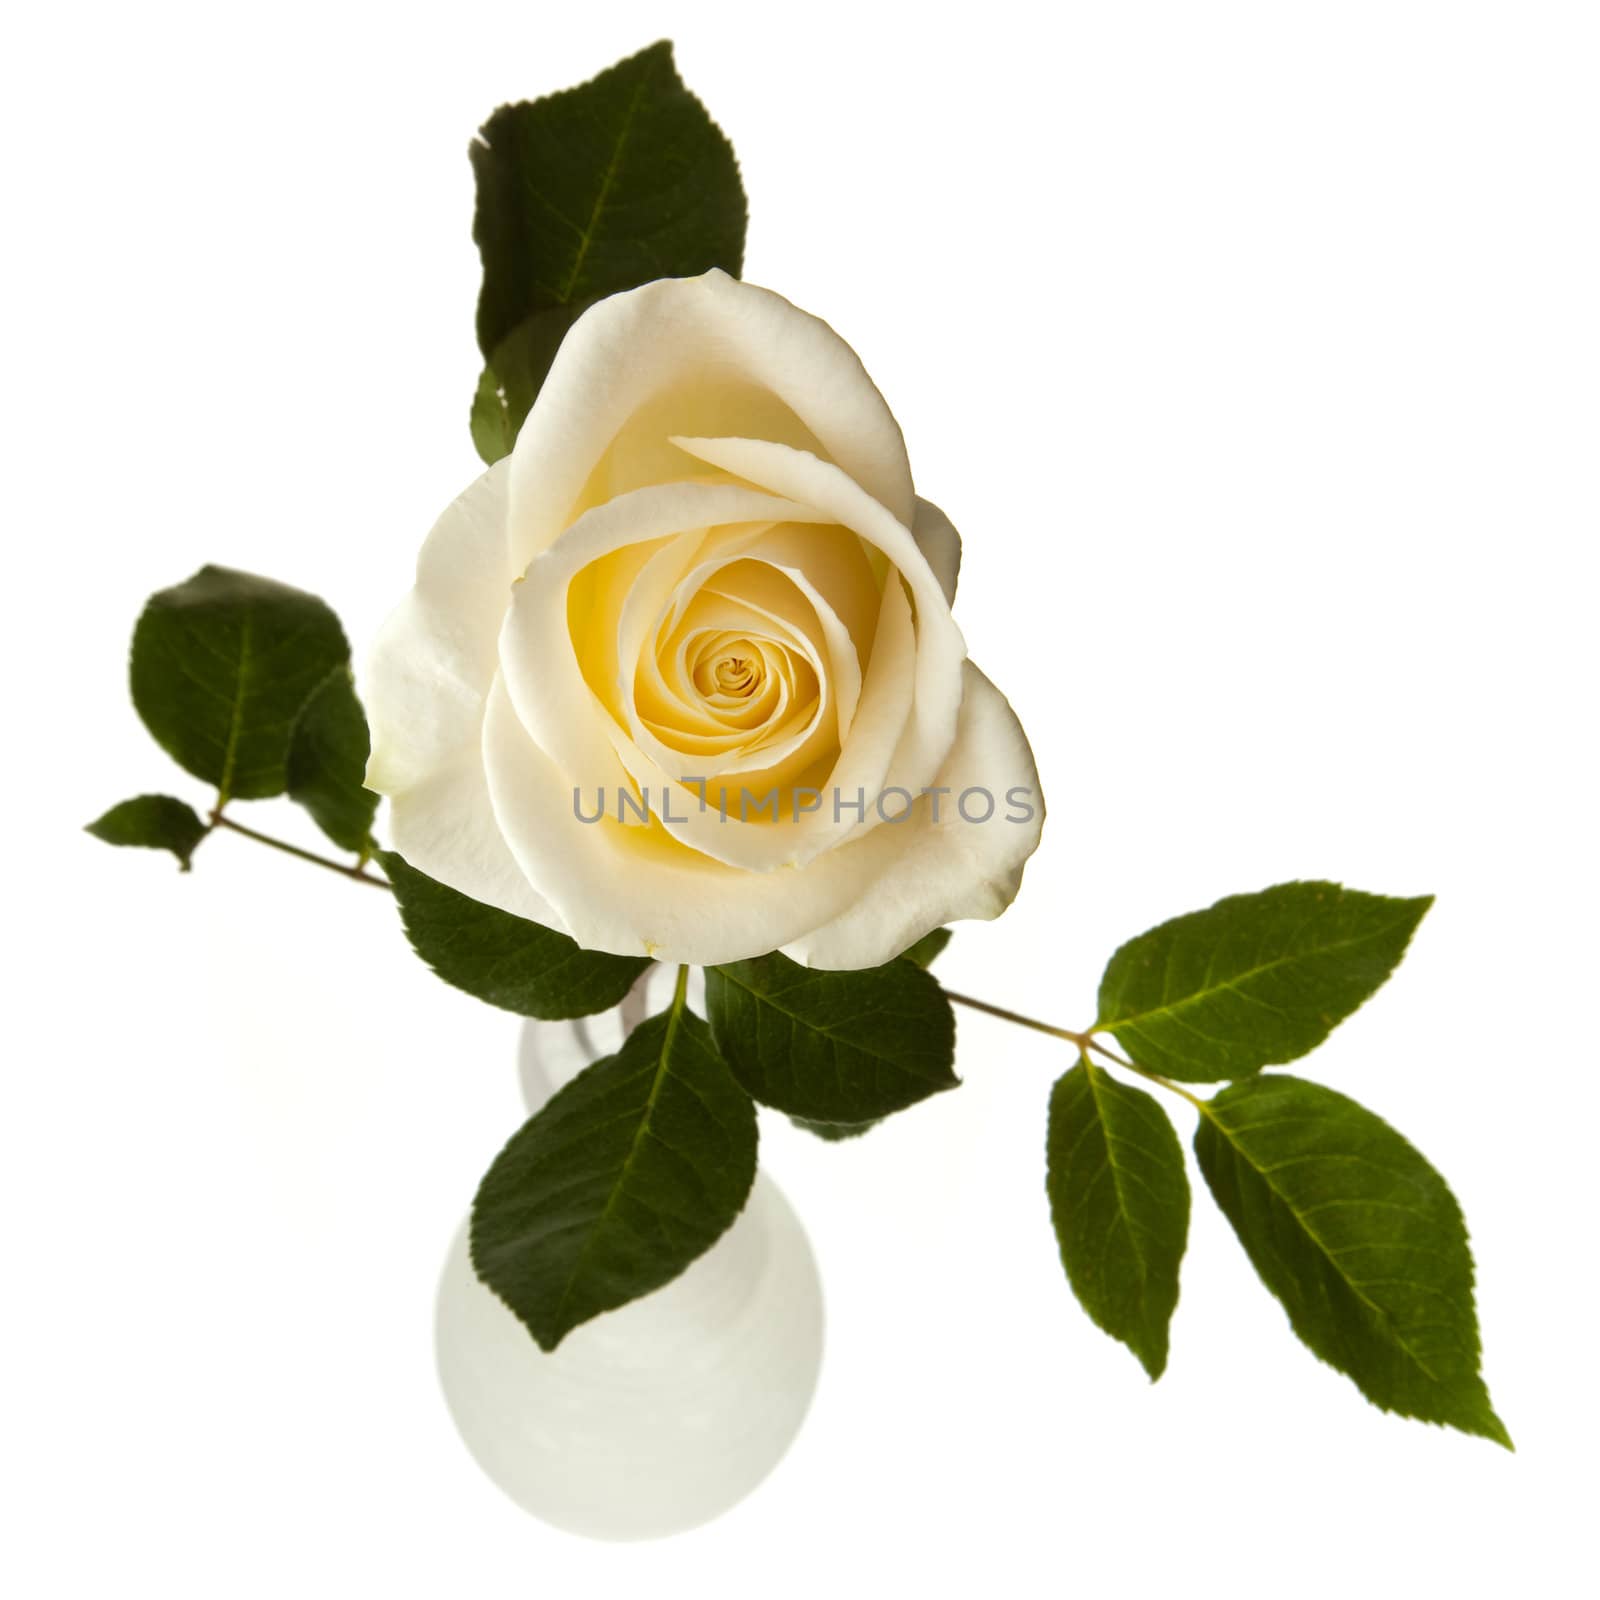 White rose isolated on white background by Antartis